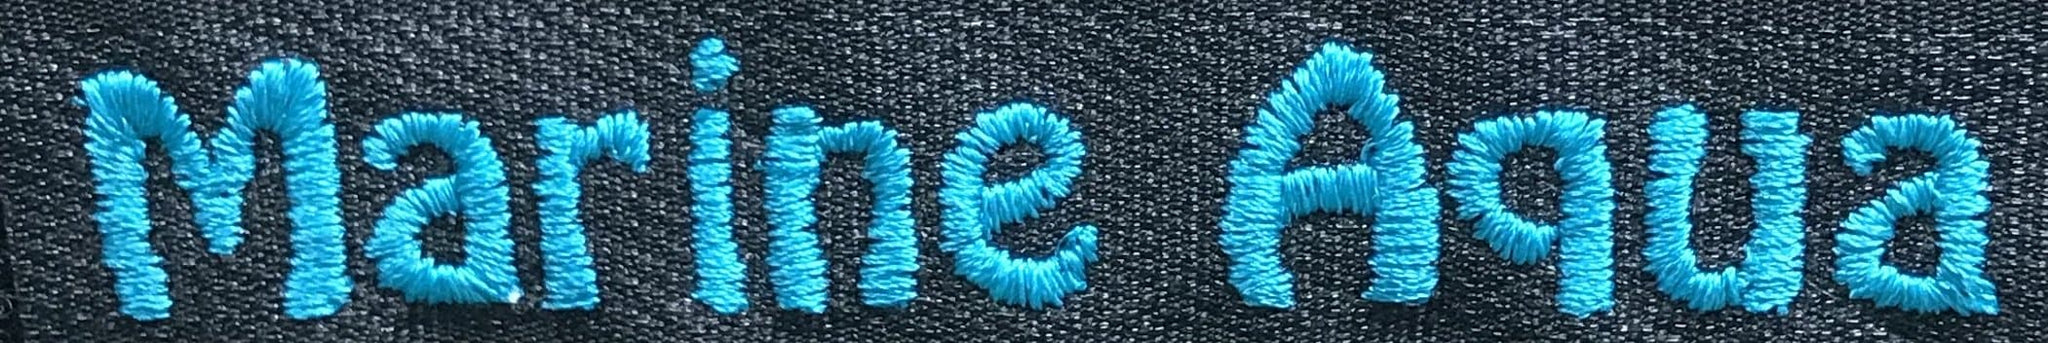 example of embroidery in marine aqua